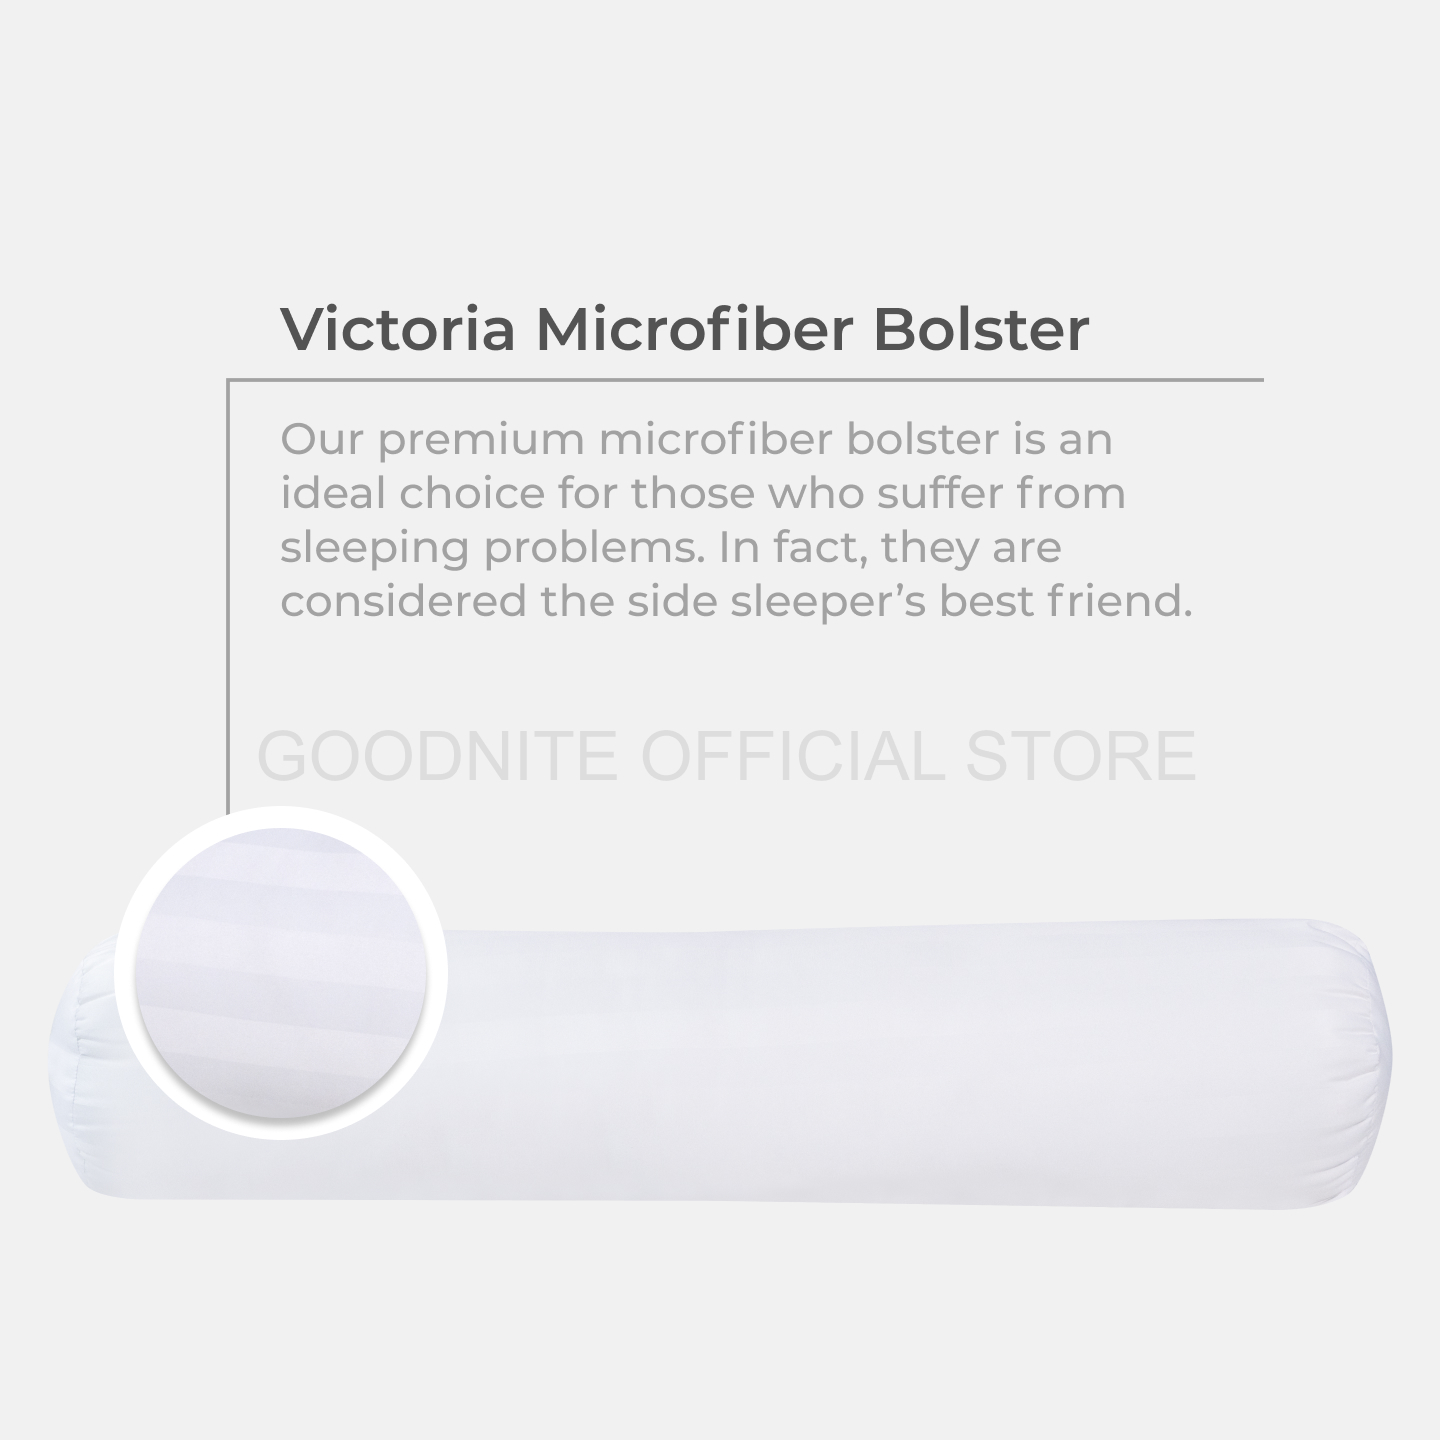 Vitorita Microfiber Bolster 1.jpg